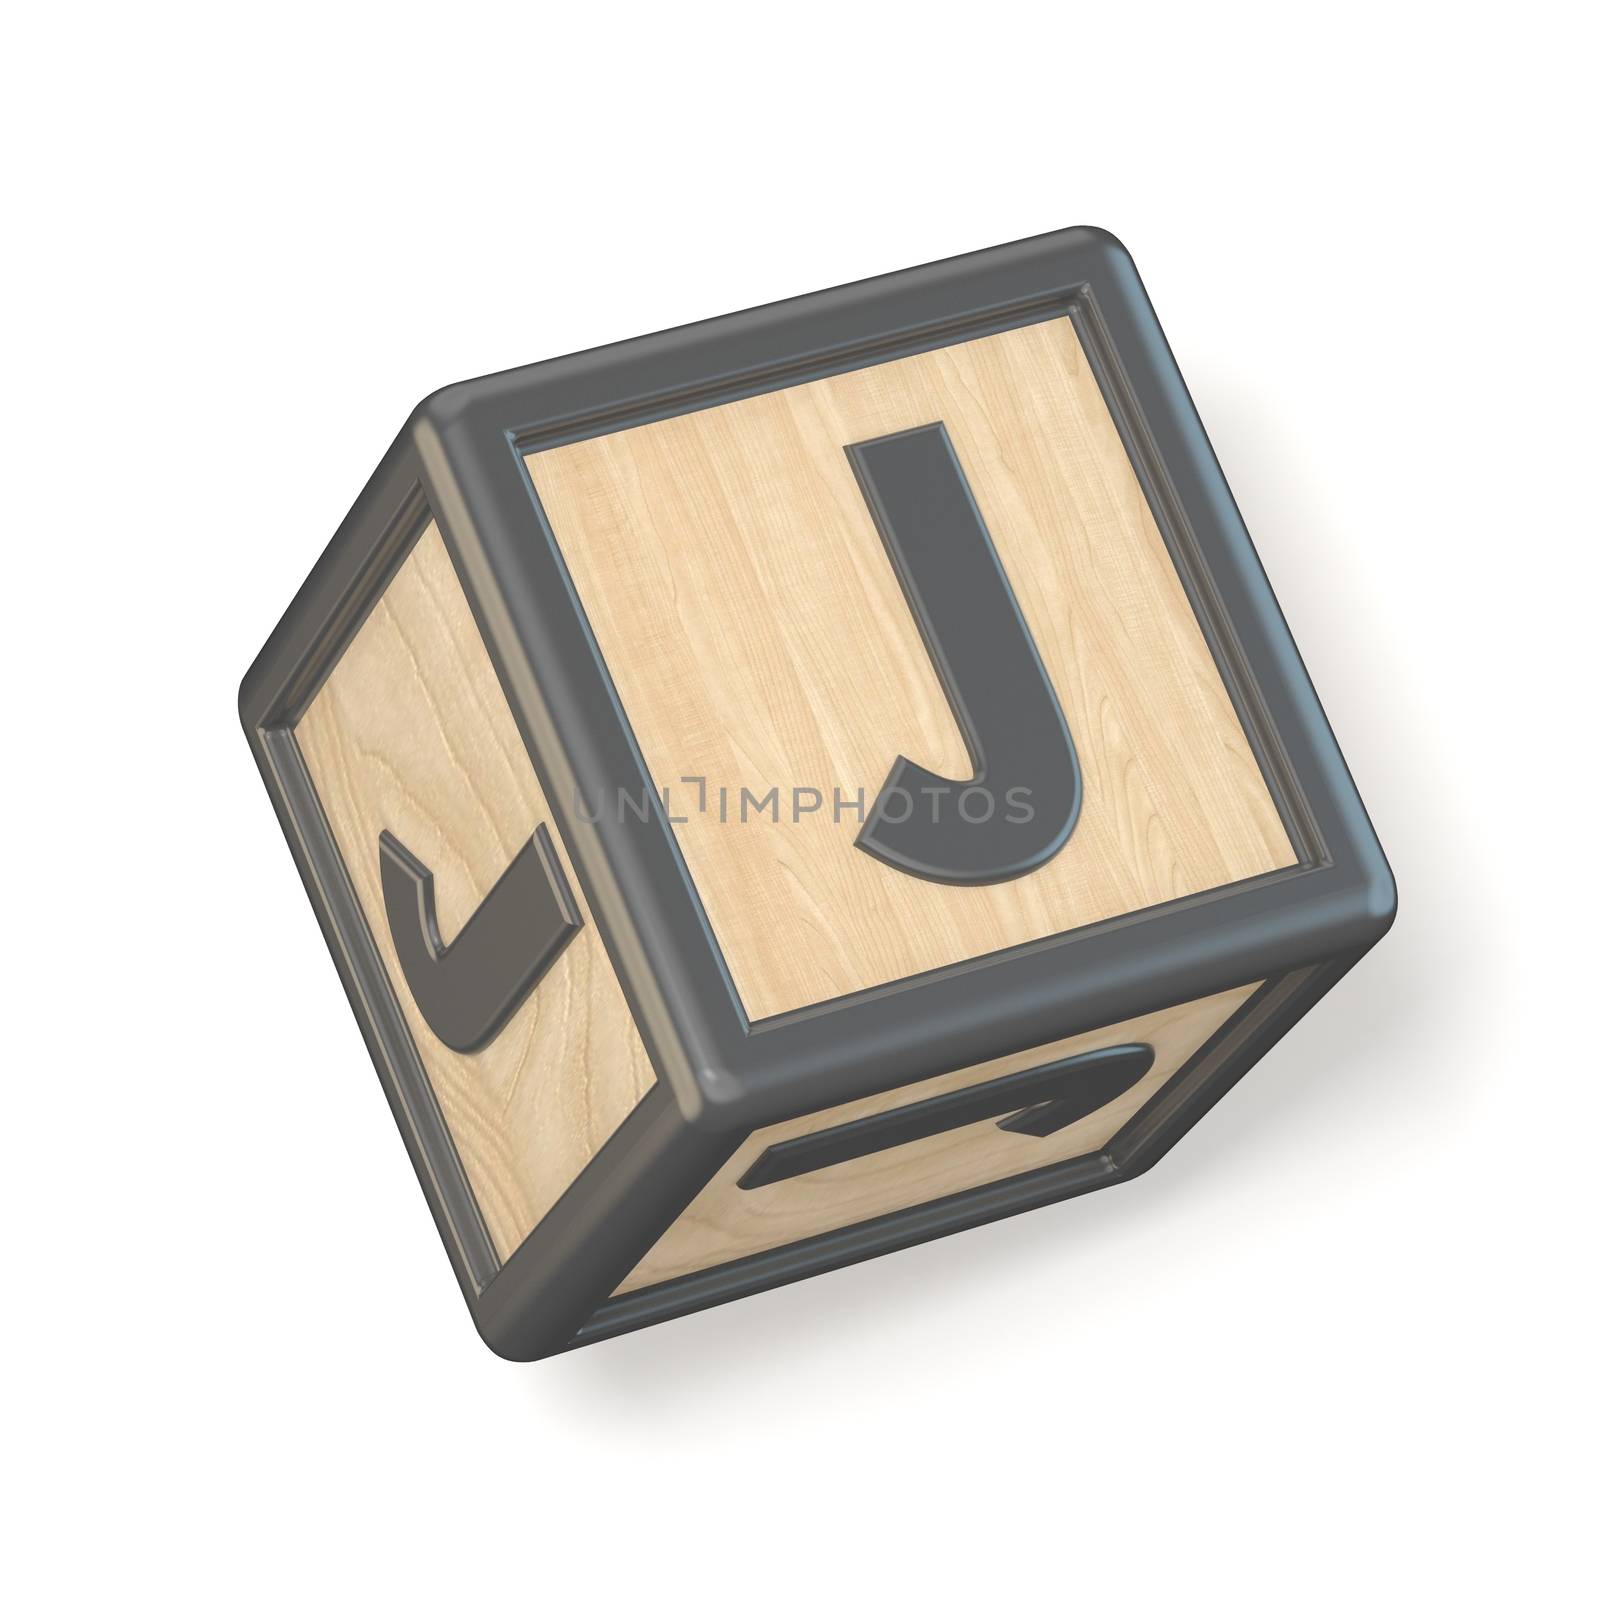 Letter J wooden alphabet blocks font rotated. 3D render illustration isolated on white background